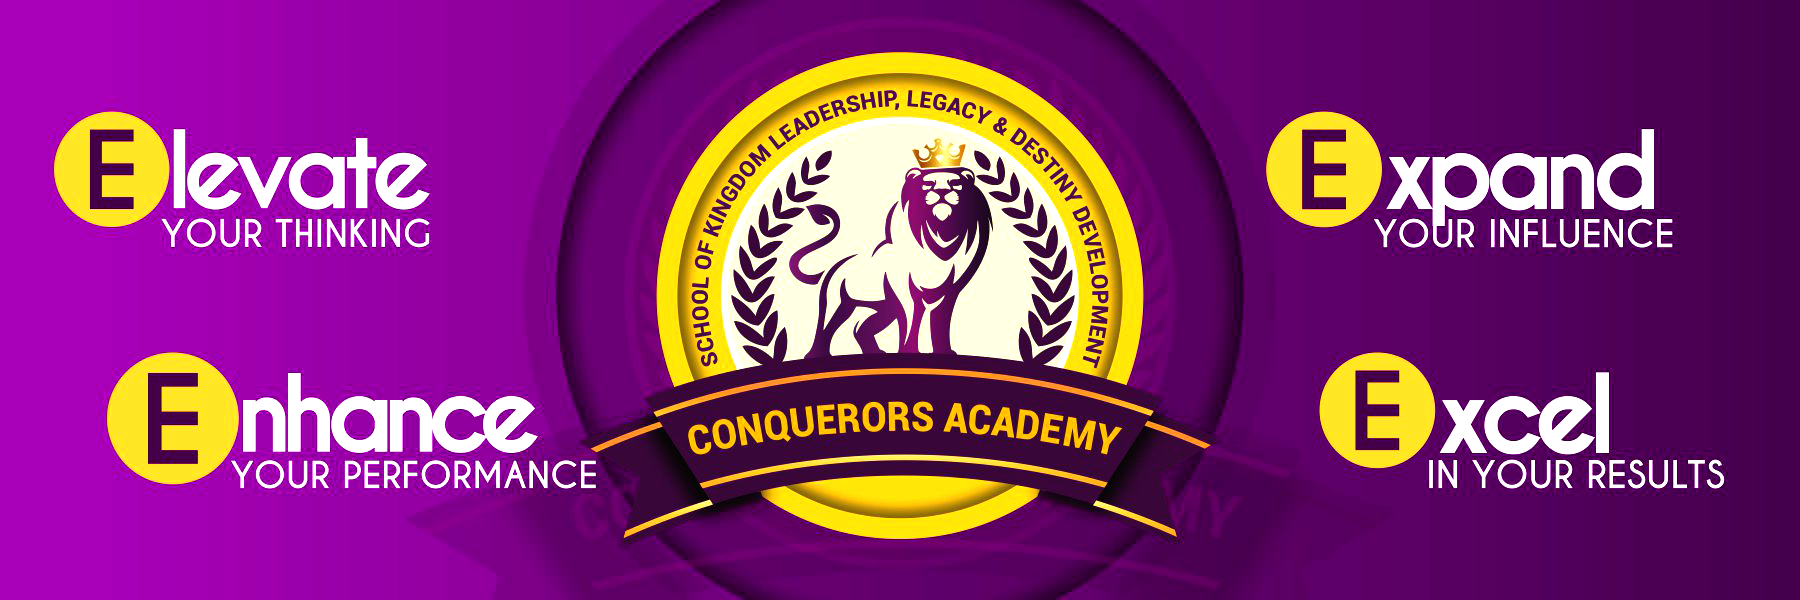 Conquerors Academy Elevate Enhance Expand Excel